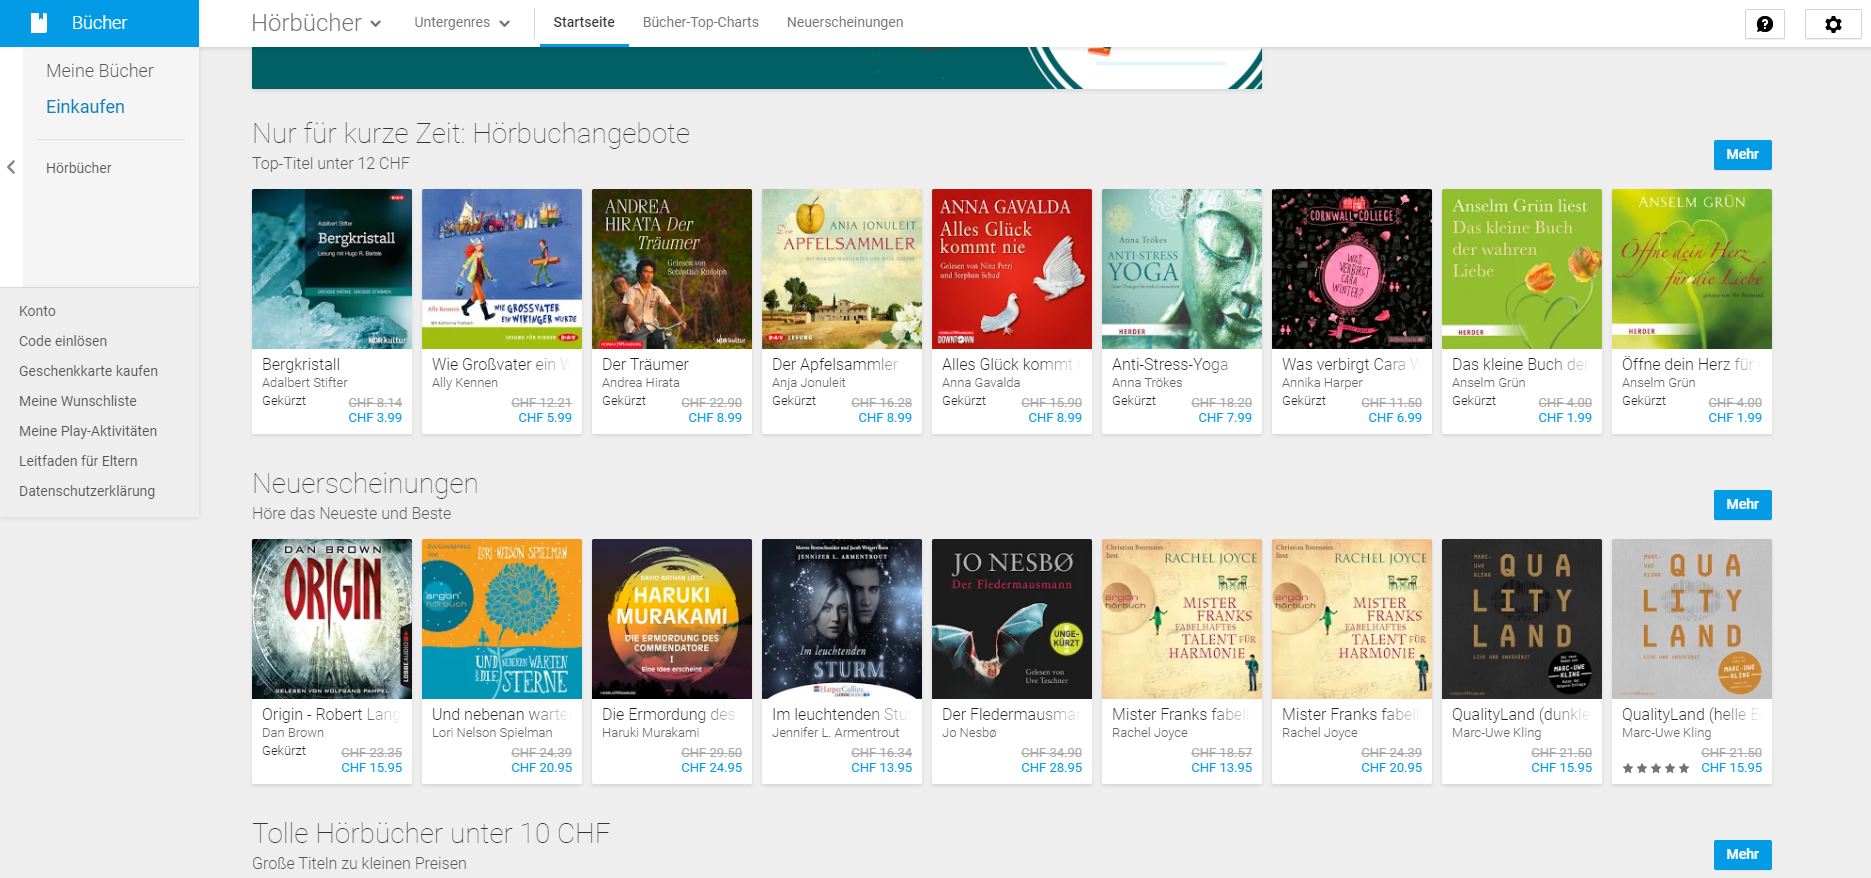 Google bringt Hörbücher auf Google Play